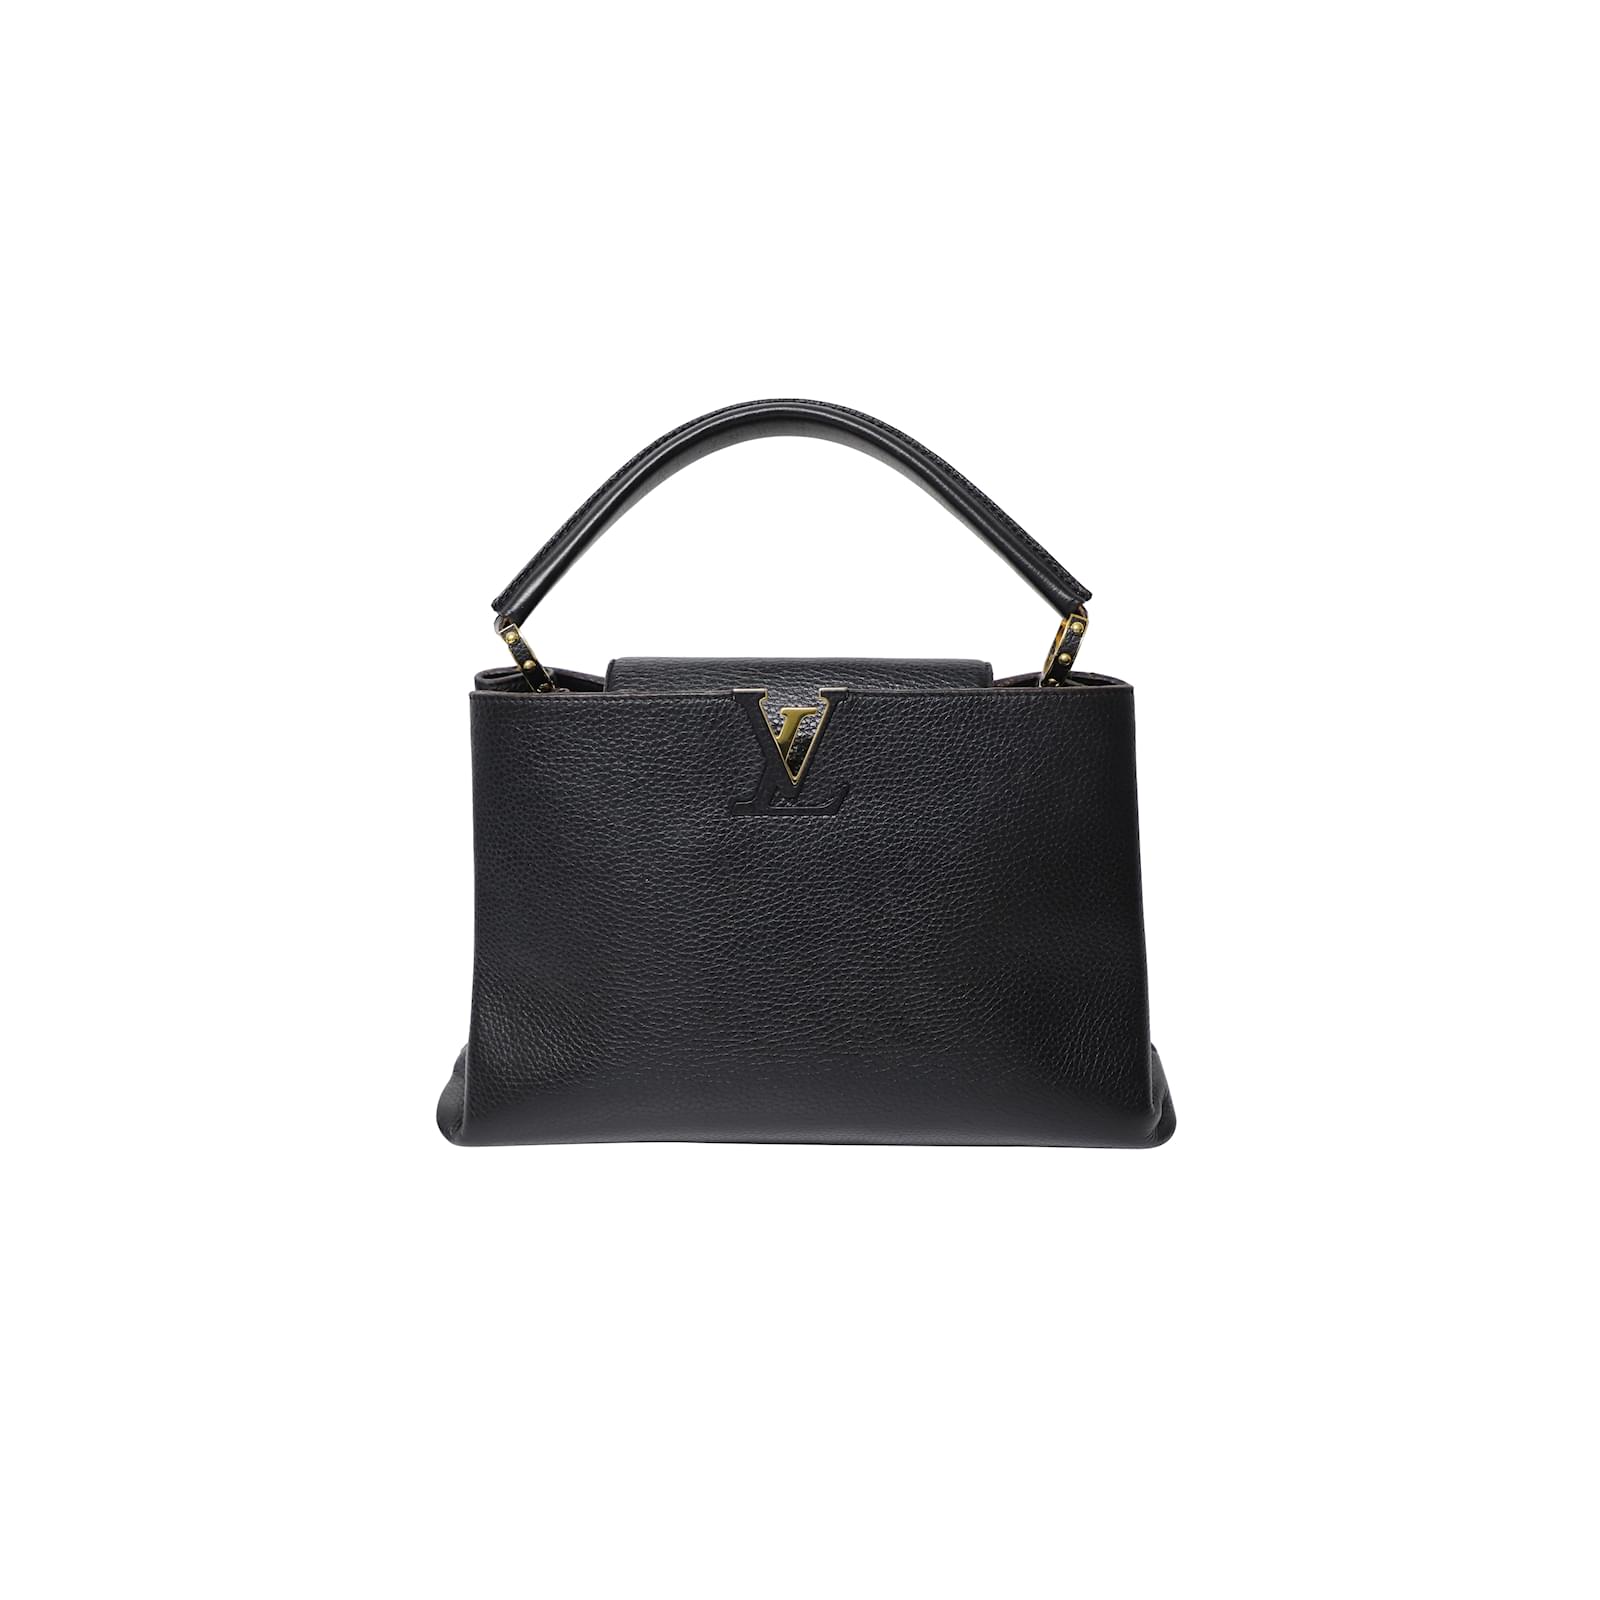 Louis Vuitton Capucines Handbag